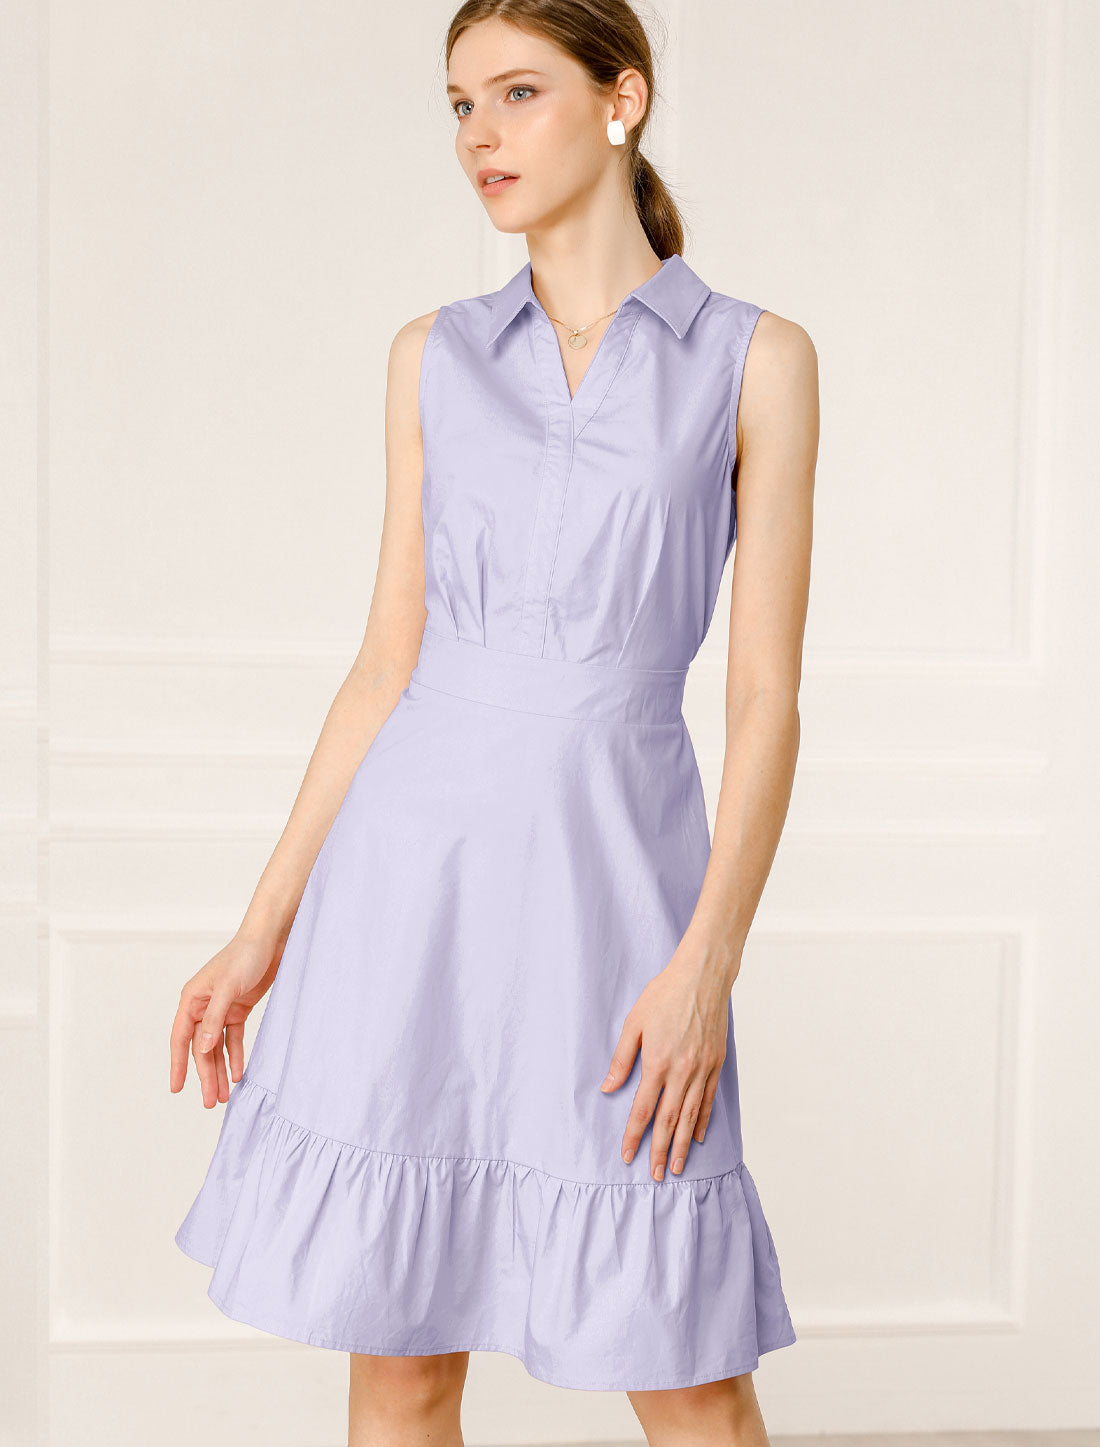 Allegra K Cotton Casual Ruffled Sleeveless Vintage Belted Shirt Dress